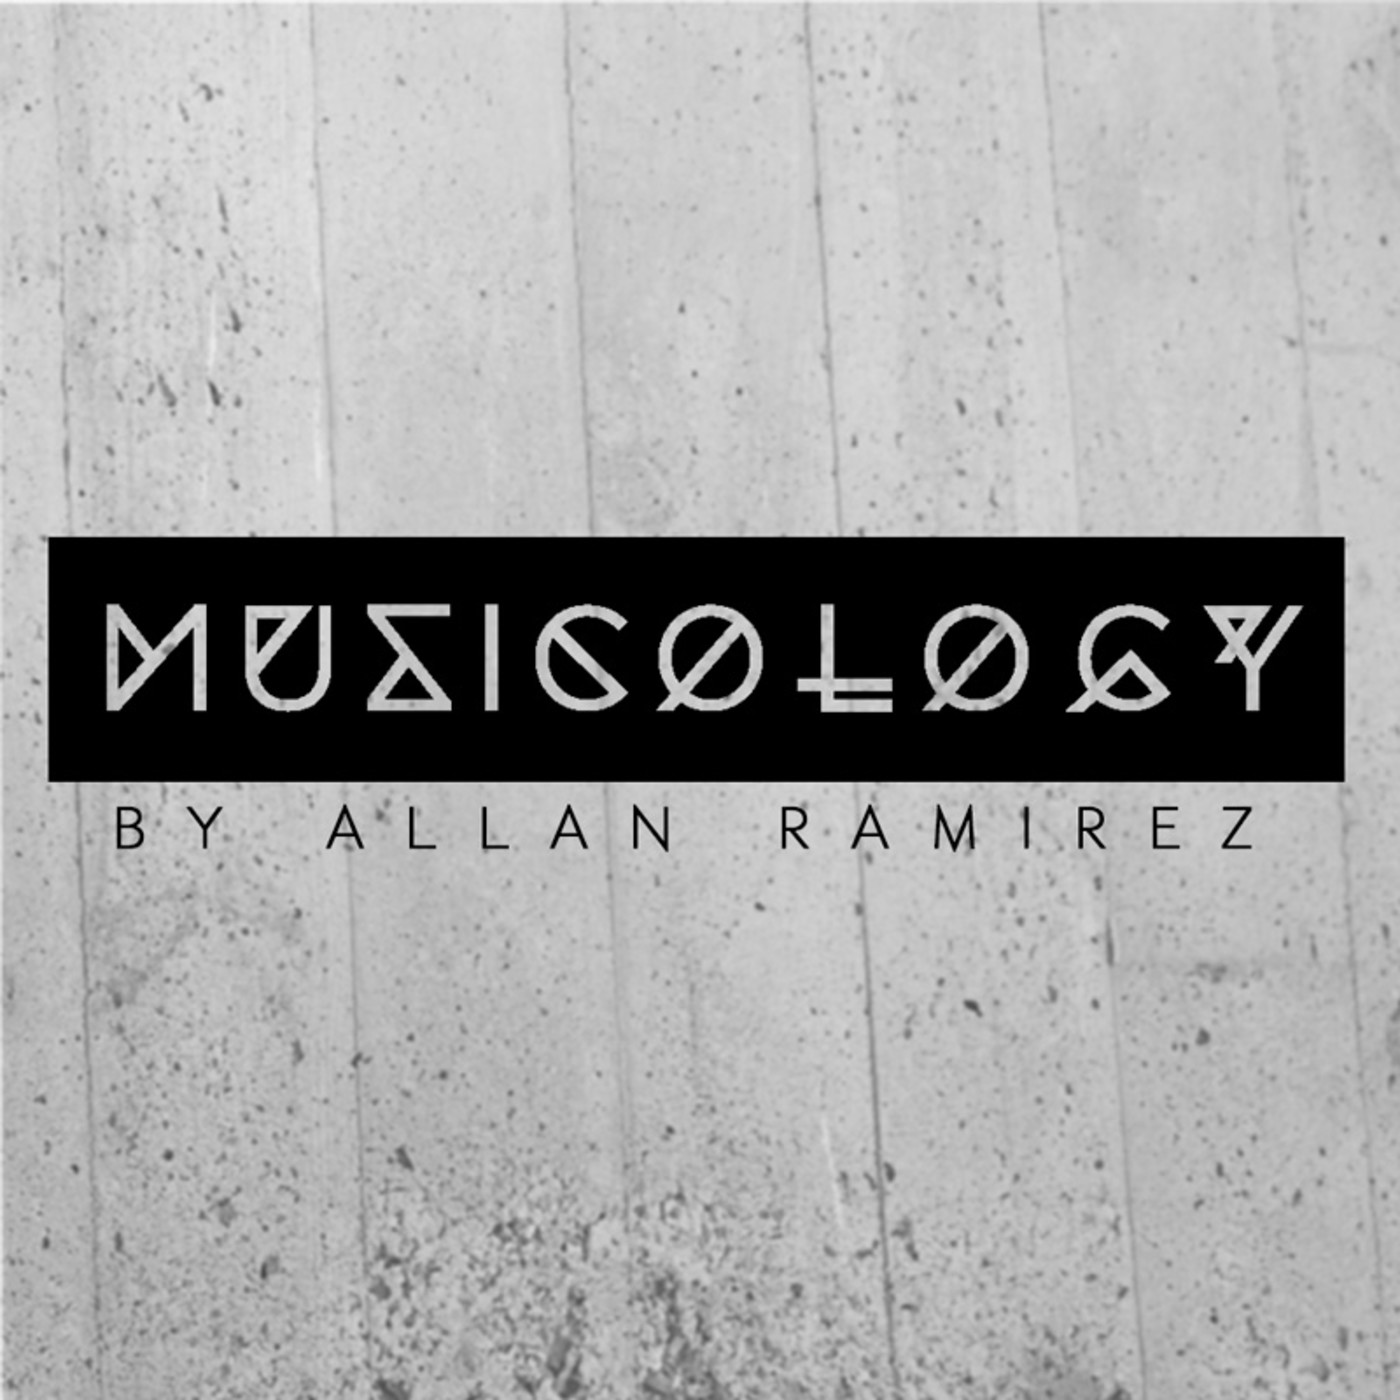 Musicology by Allan Ramirez